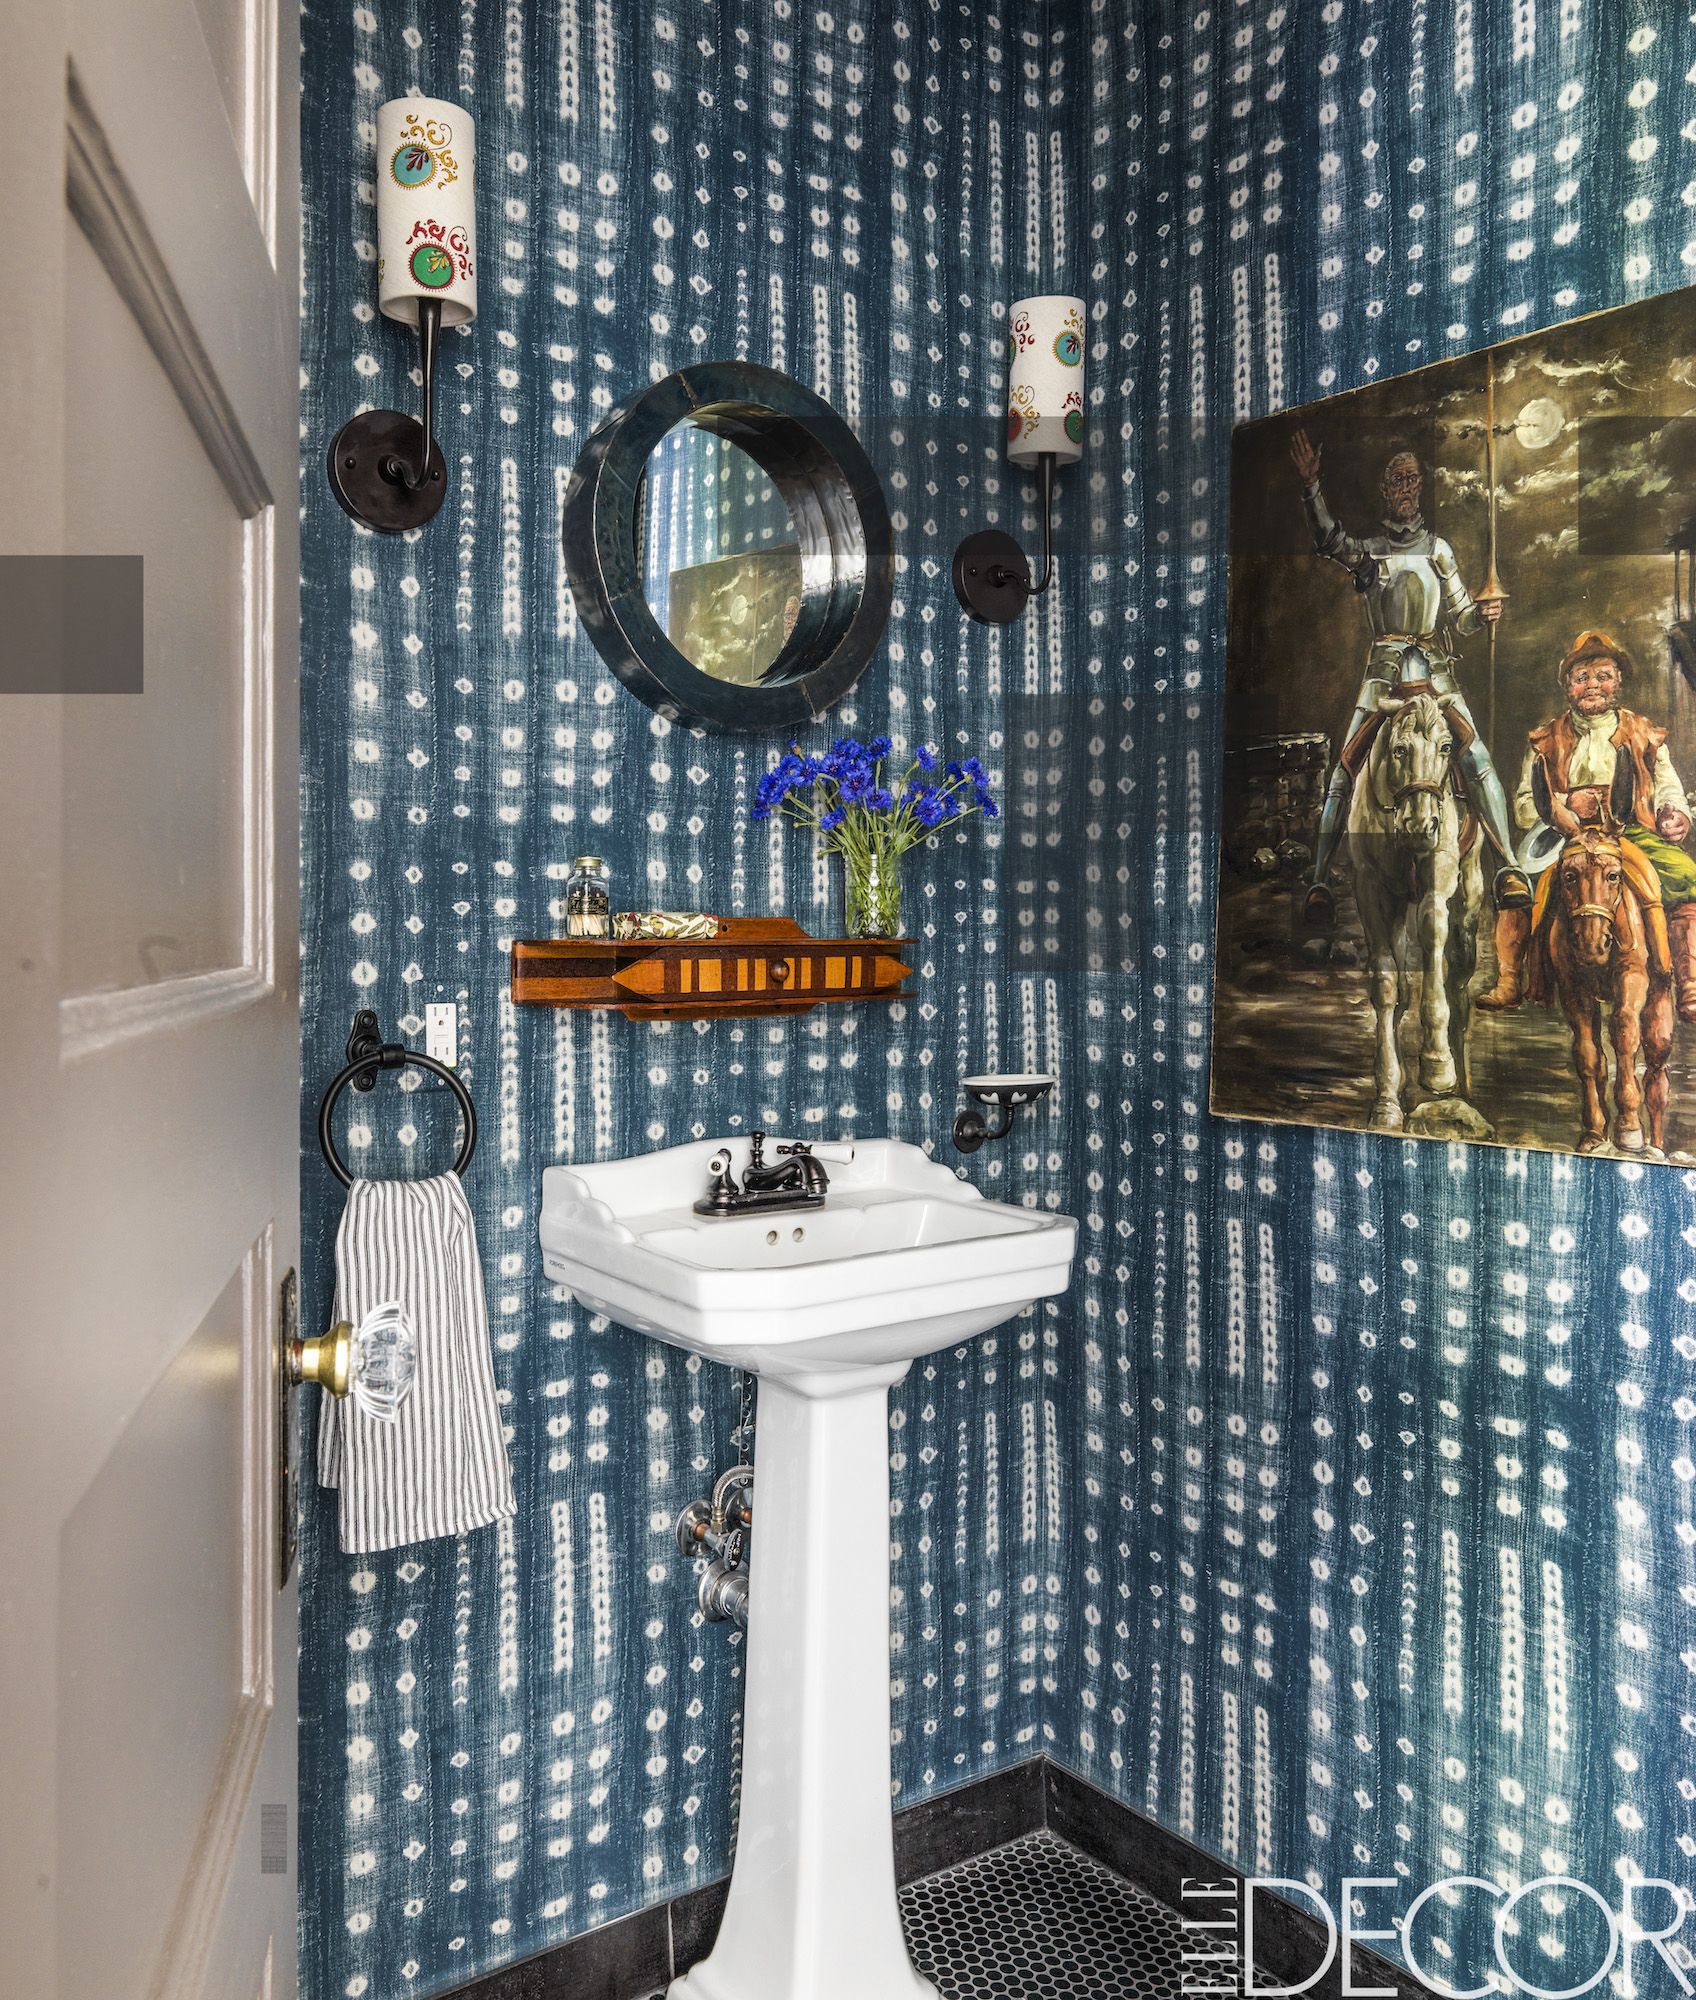 55 Bathroom Lighting Ideas For Every Style - Modern Light Fixtures for  Bathrooms